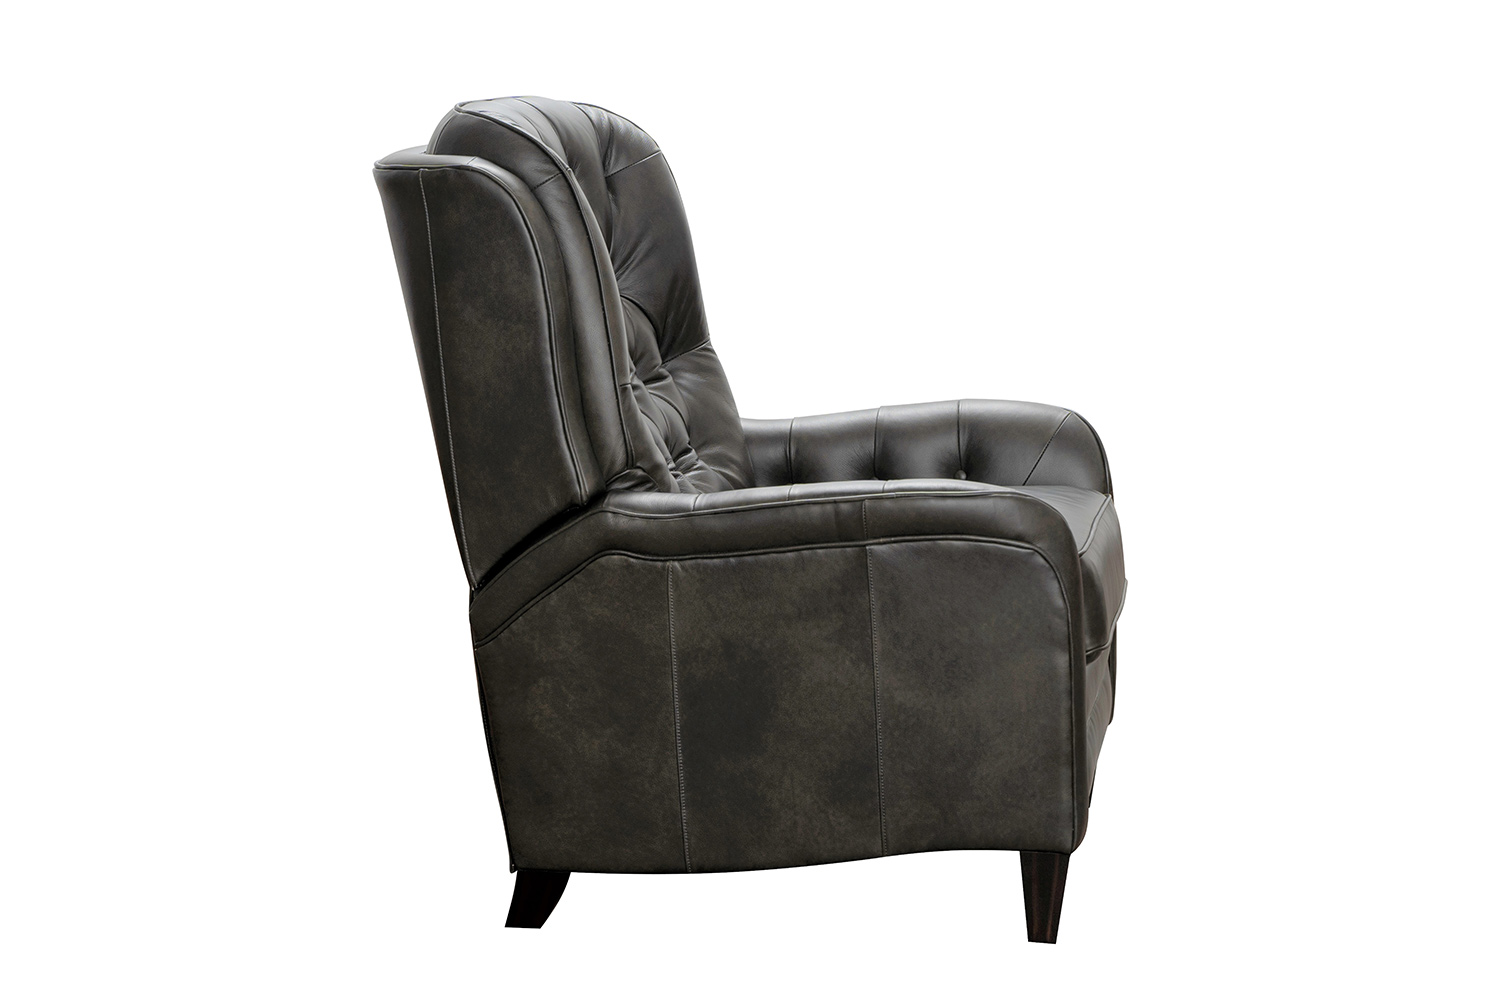 Barcalounger Whittington Recliner Chair - Ashford Graphite/All Leather